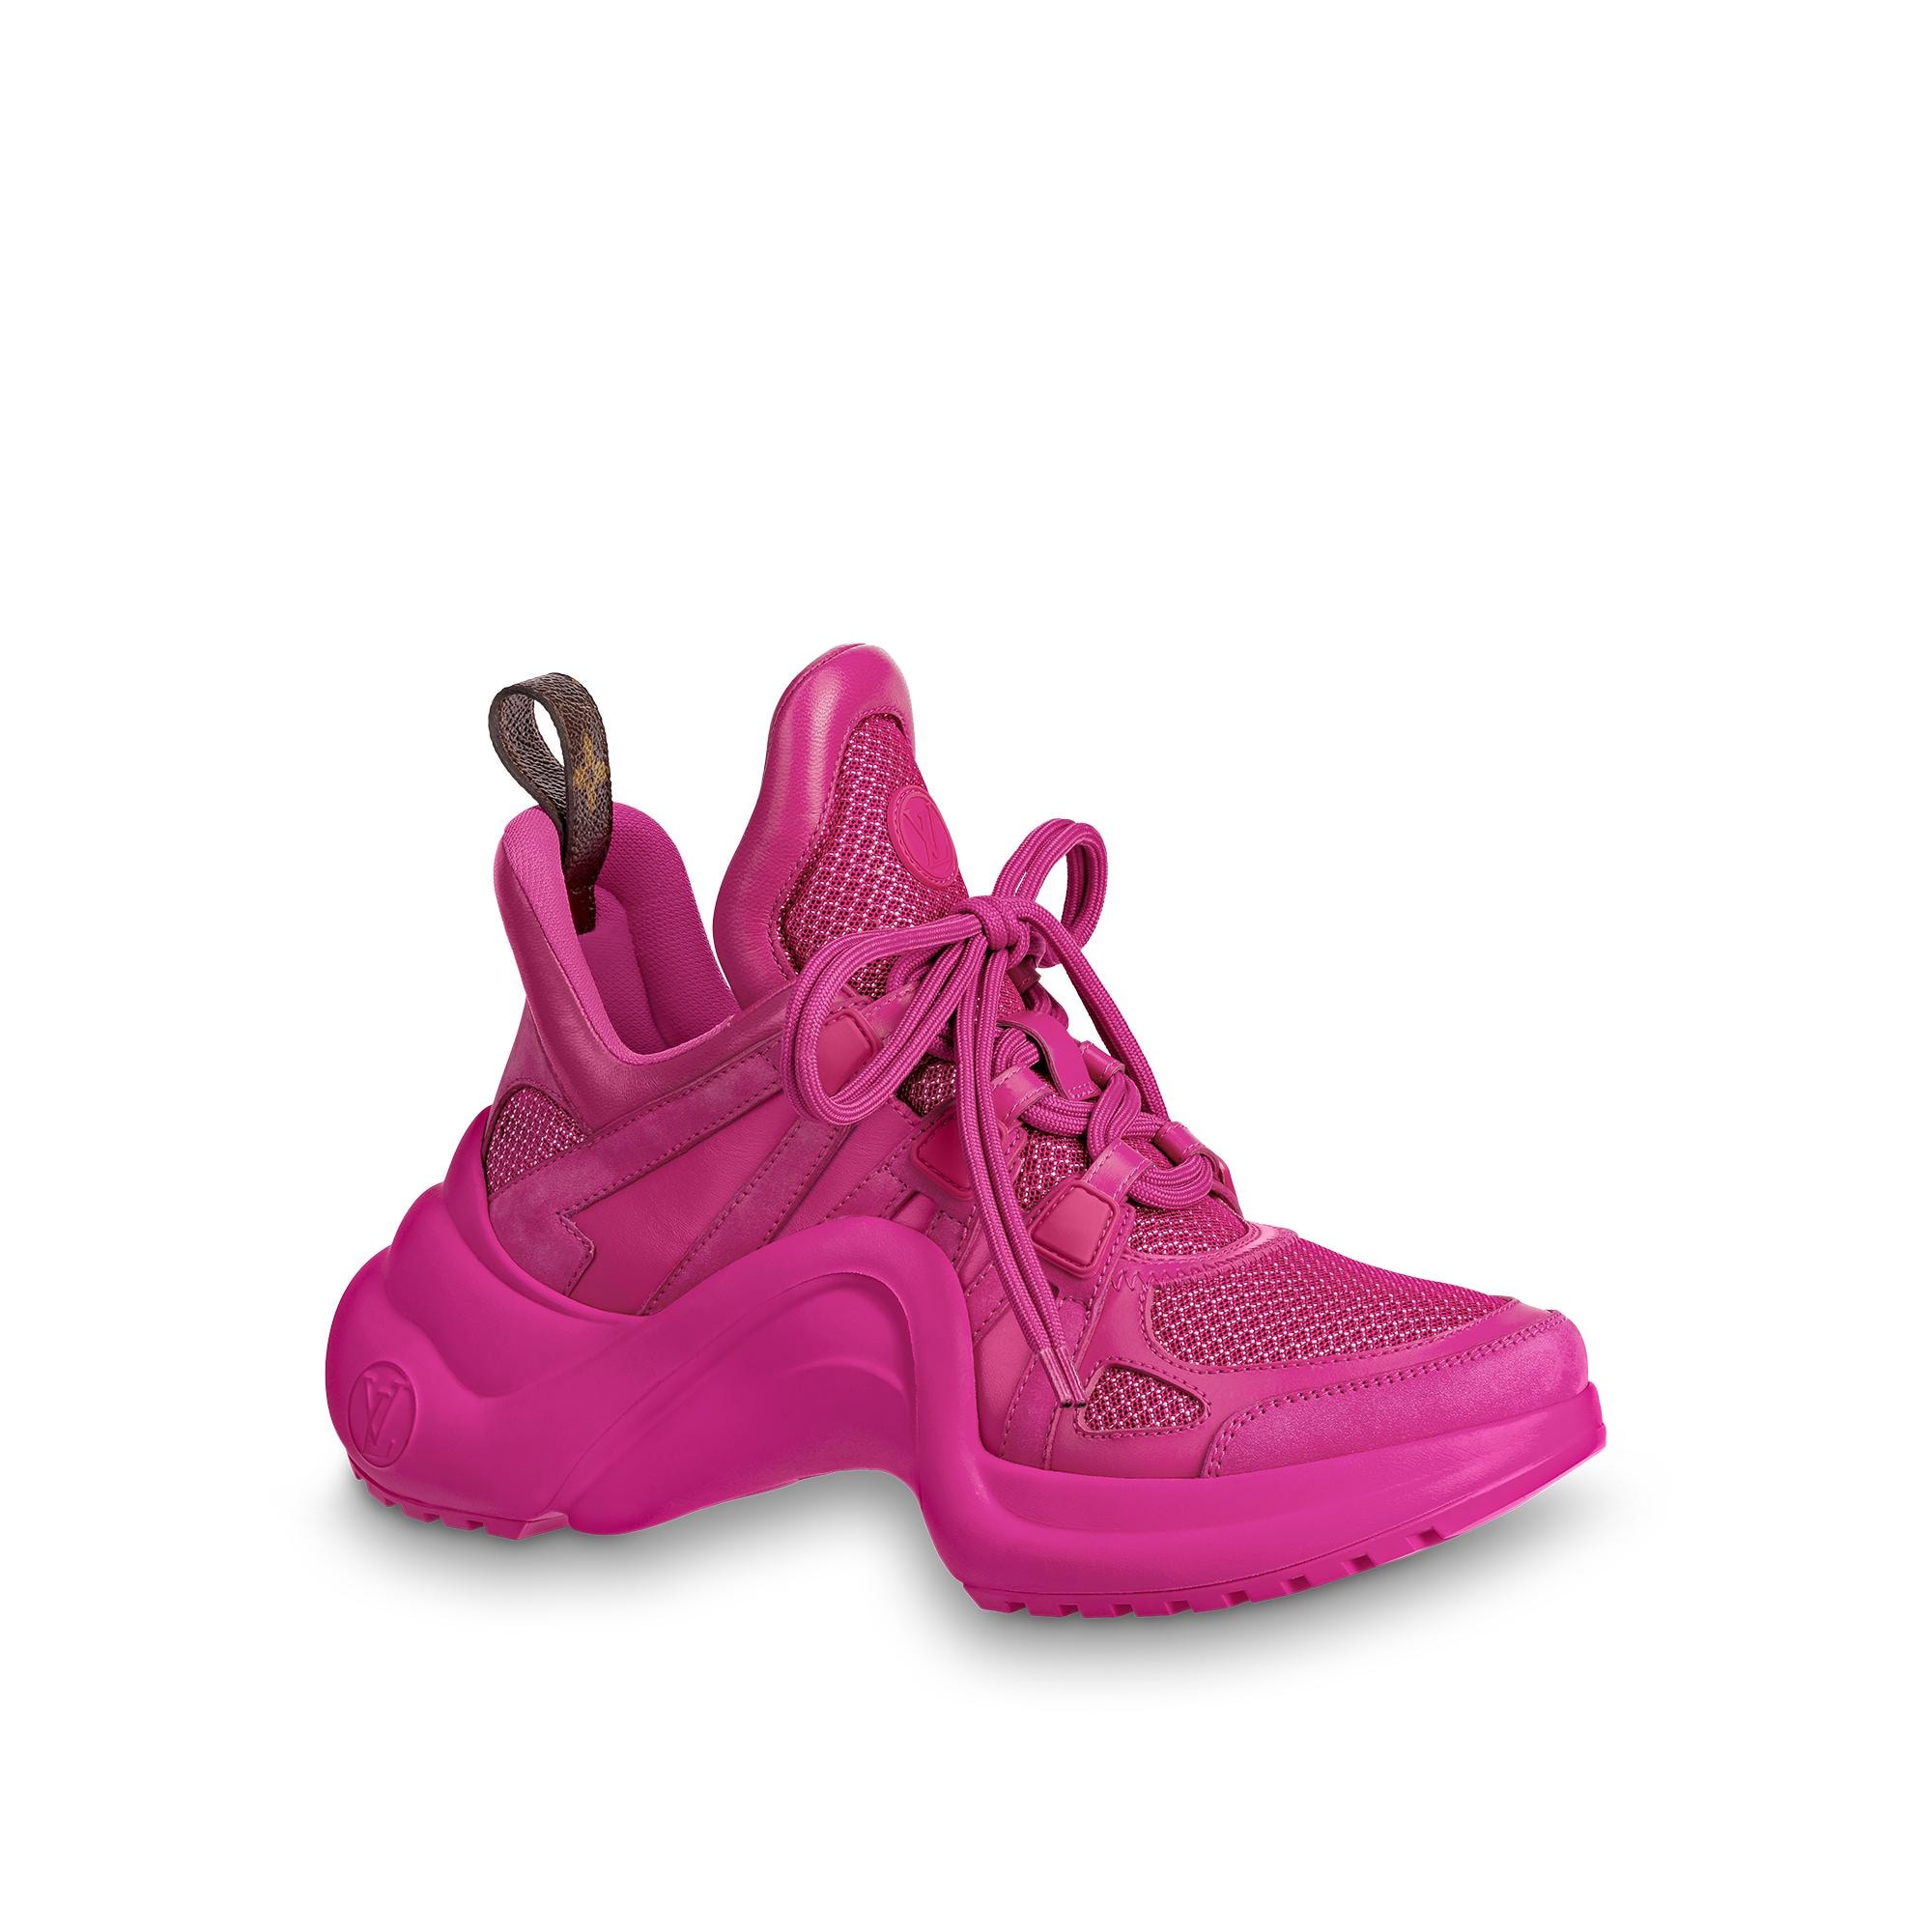 Louis Vuitton Lv Archlight Sports Shoes Pink